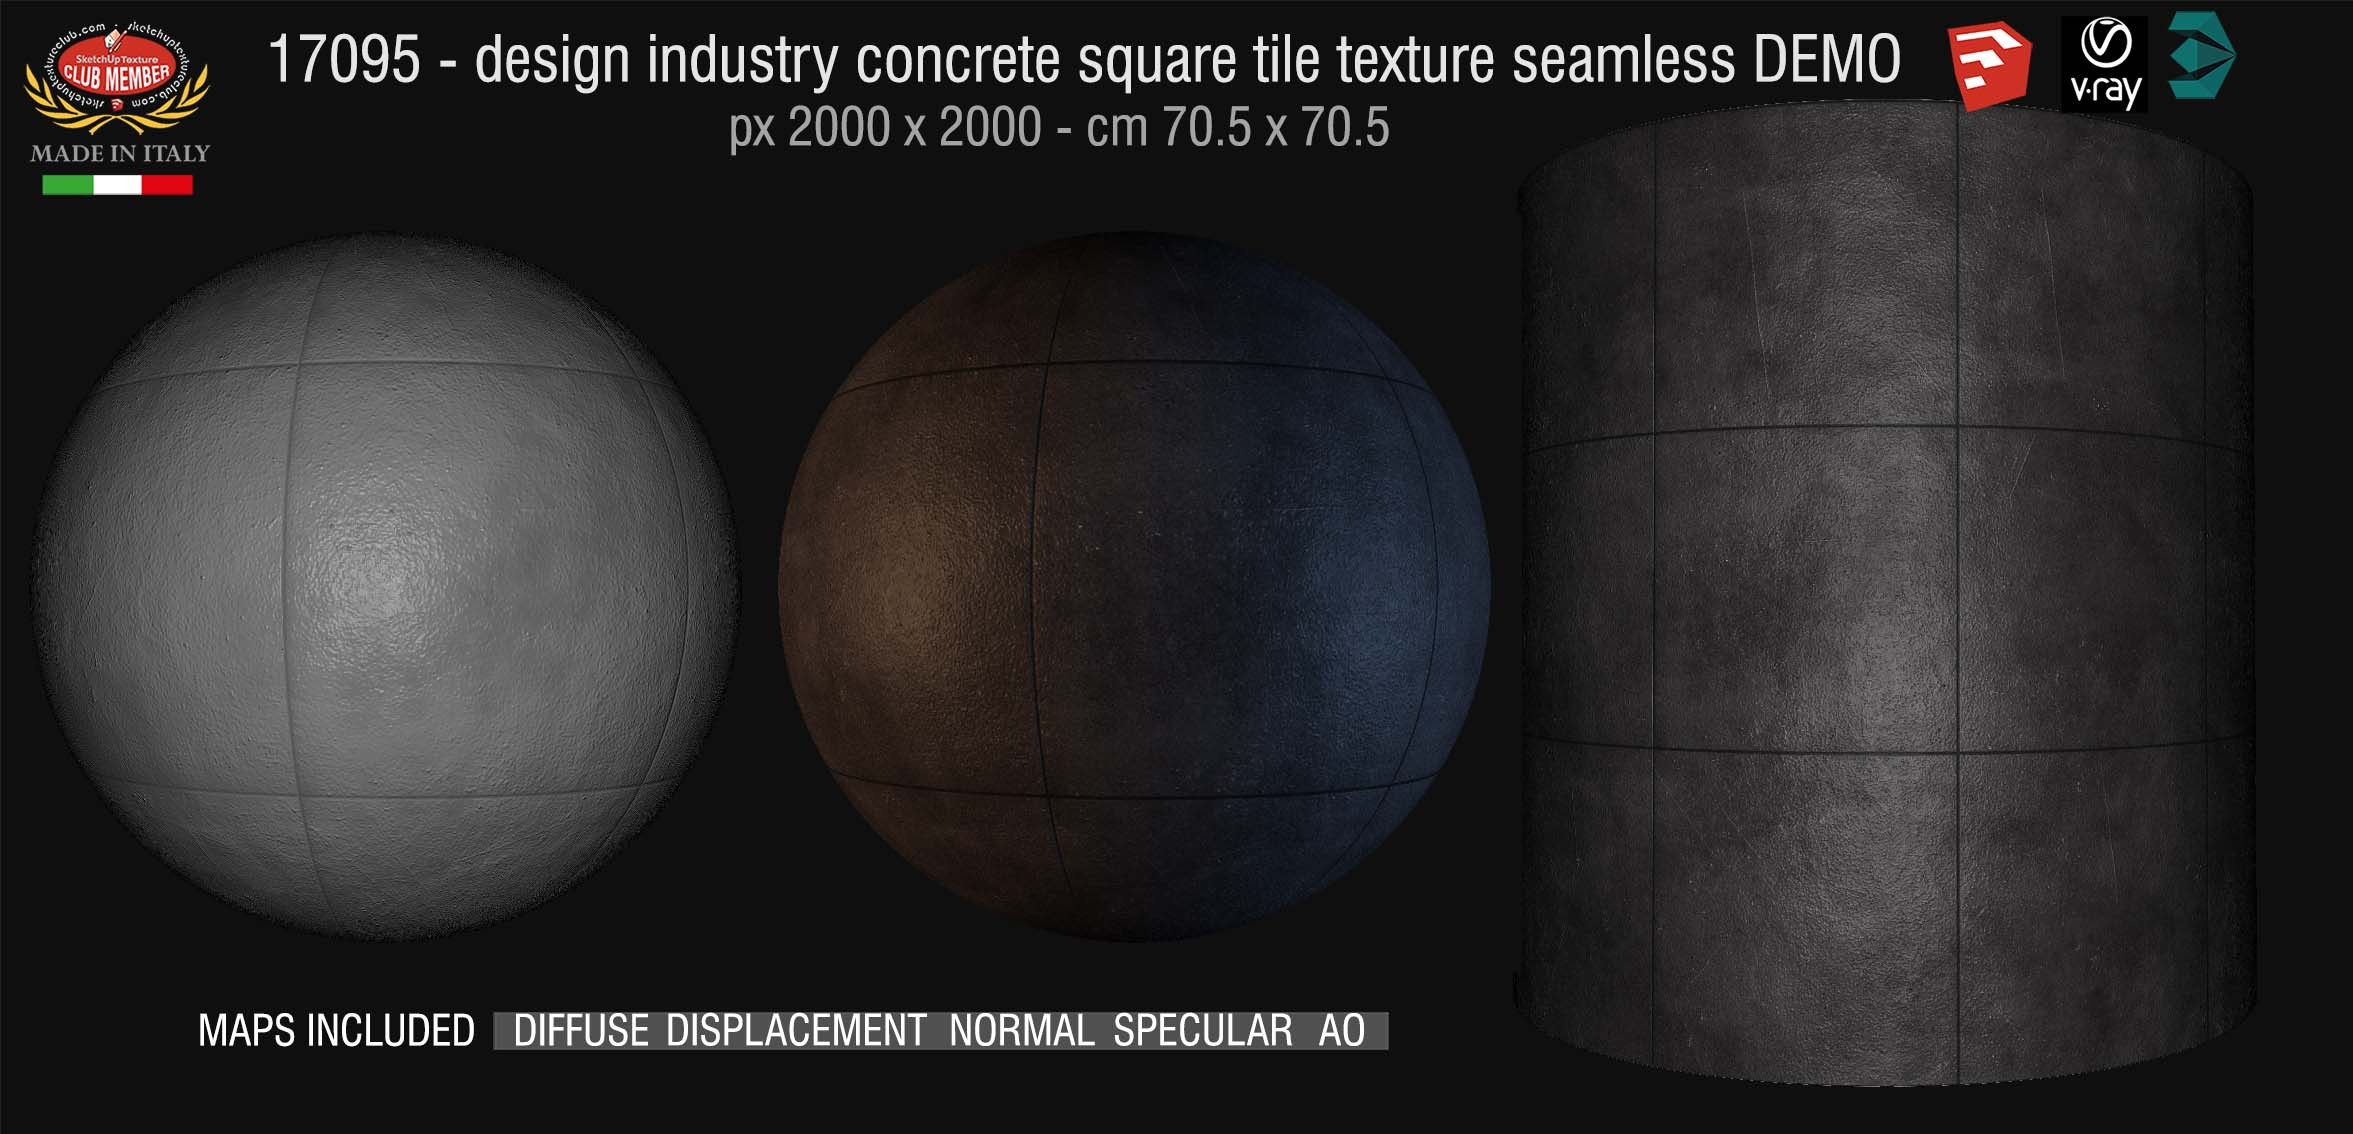 17095 Design industry concrete square tile texture seamless + maps DEMO